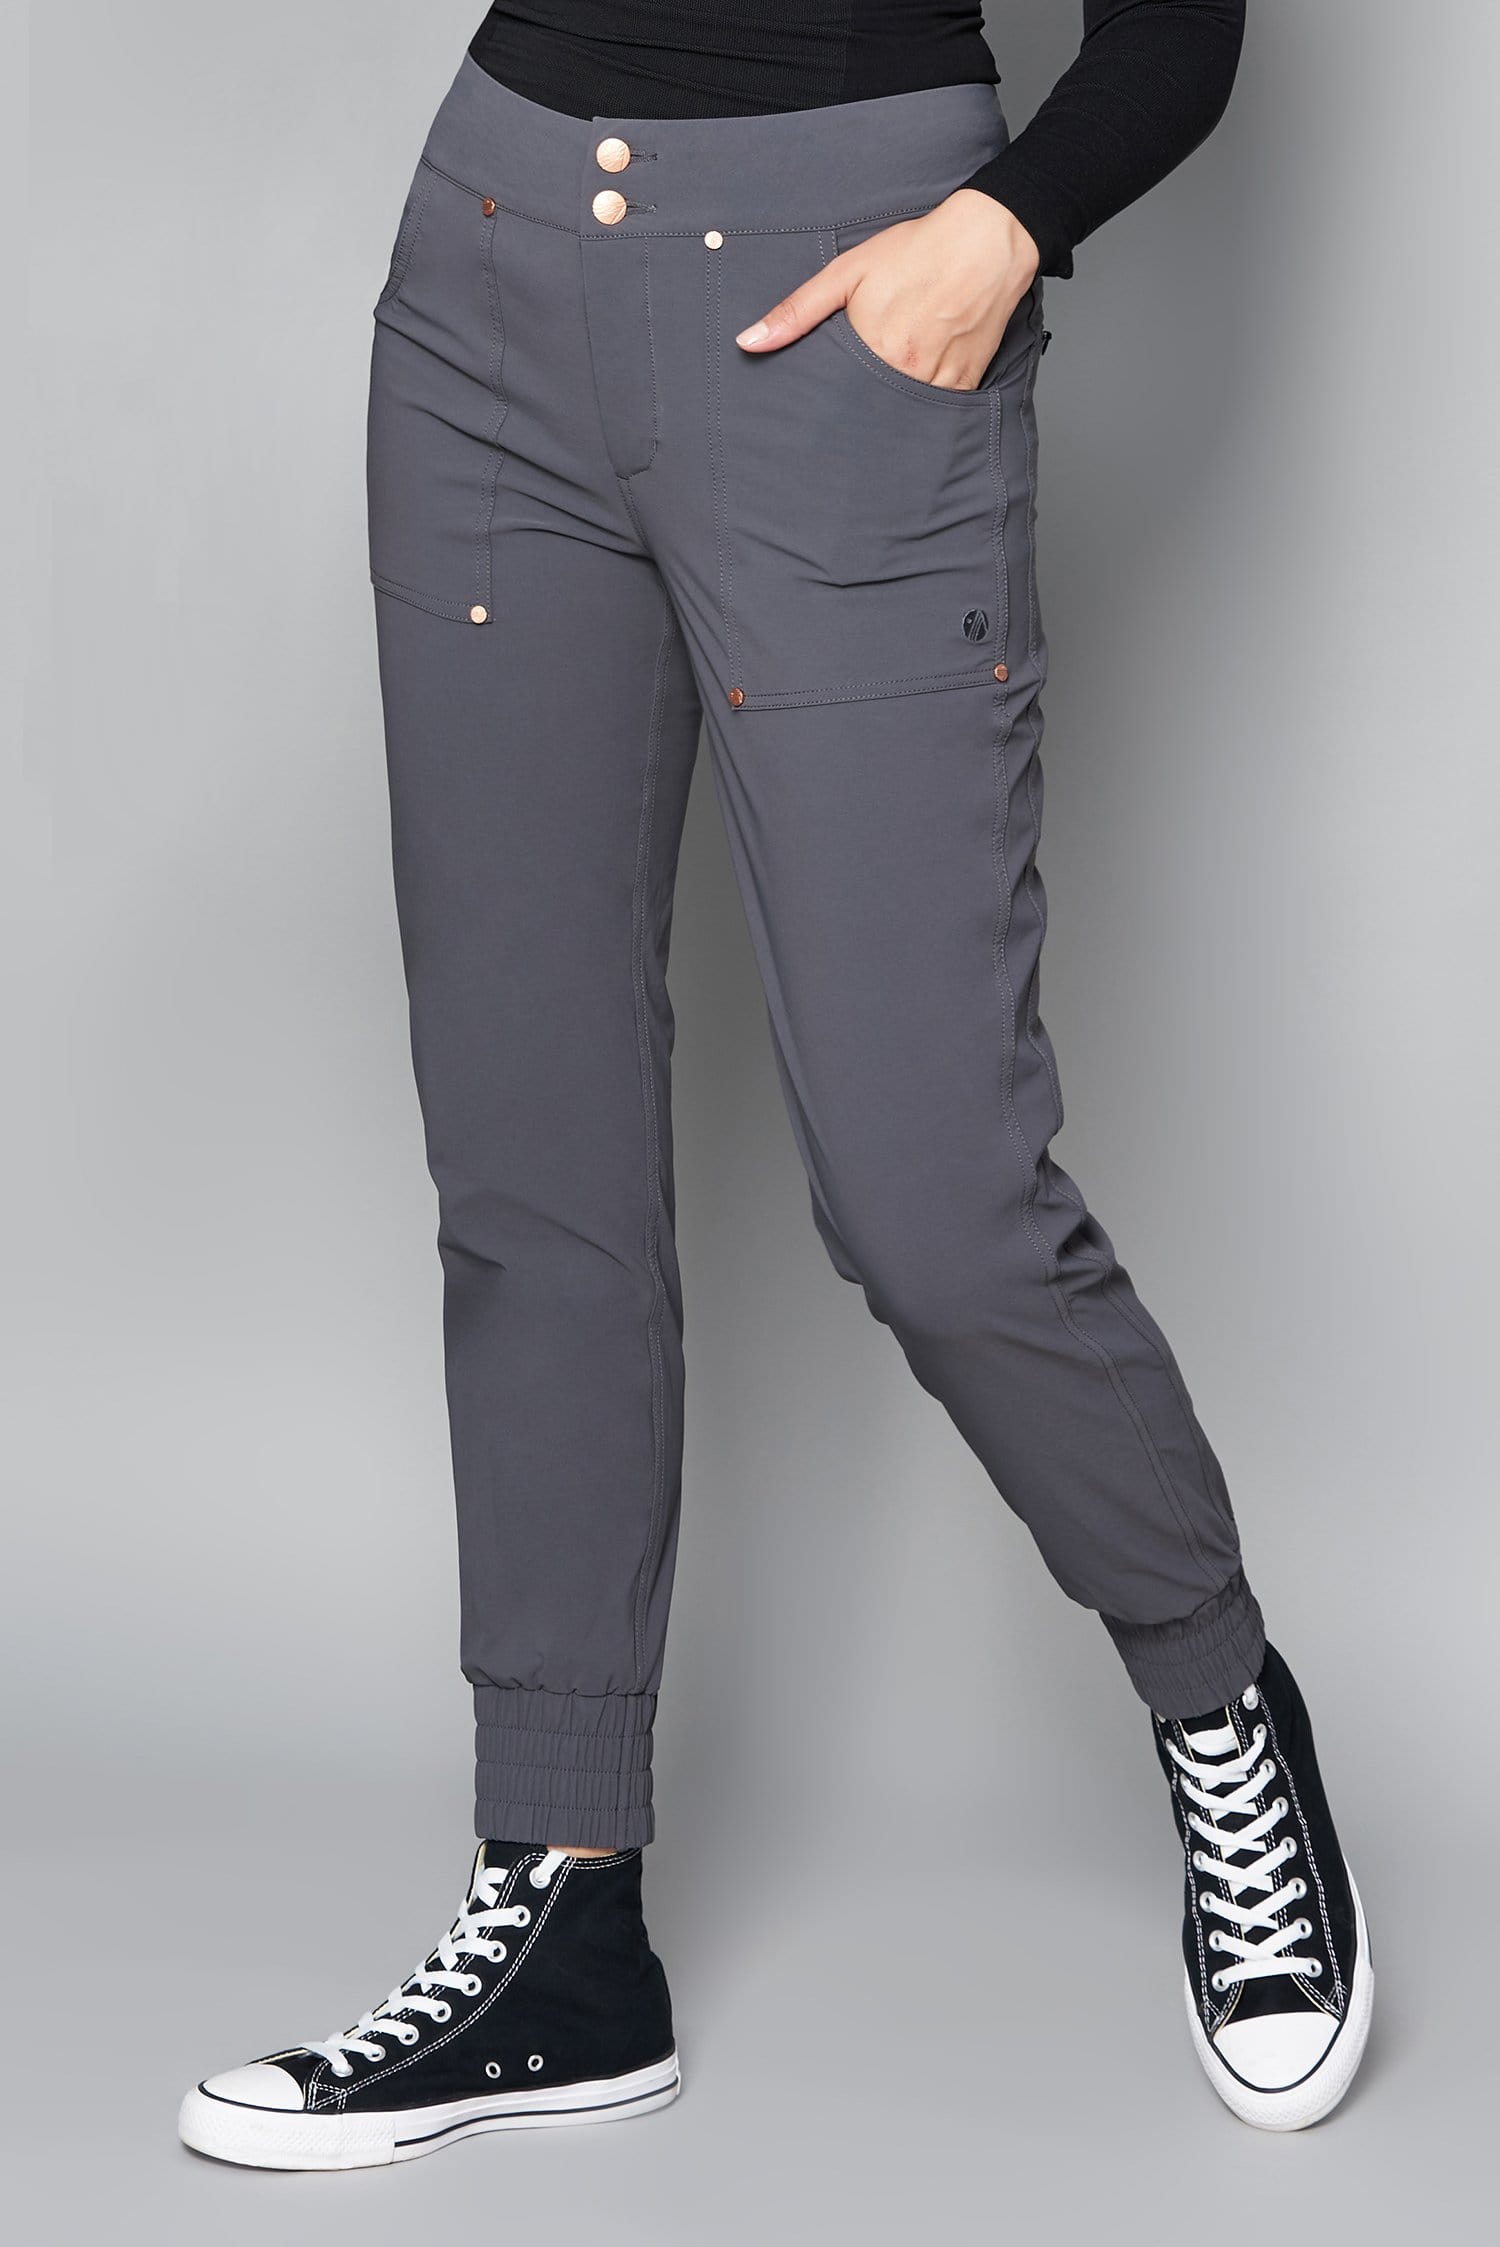 Casual Stroll Pants - Storm Grey - 24r / Uk6 - Womens - Acai Outdoorwear